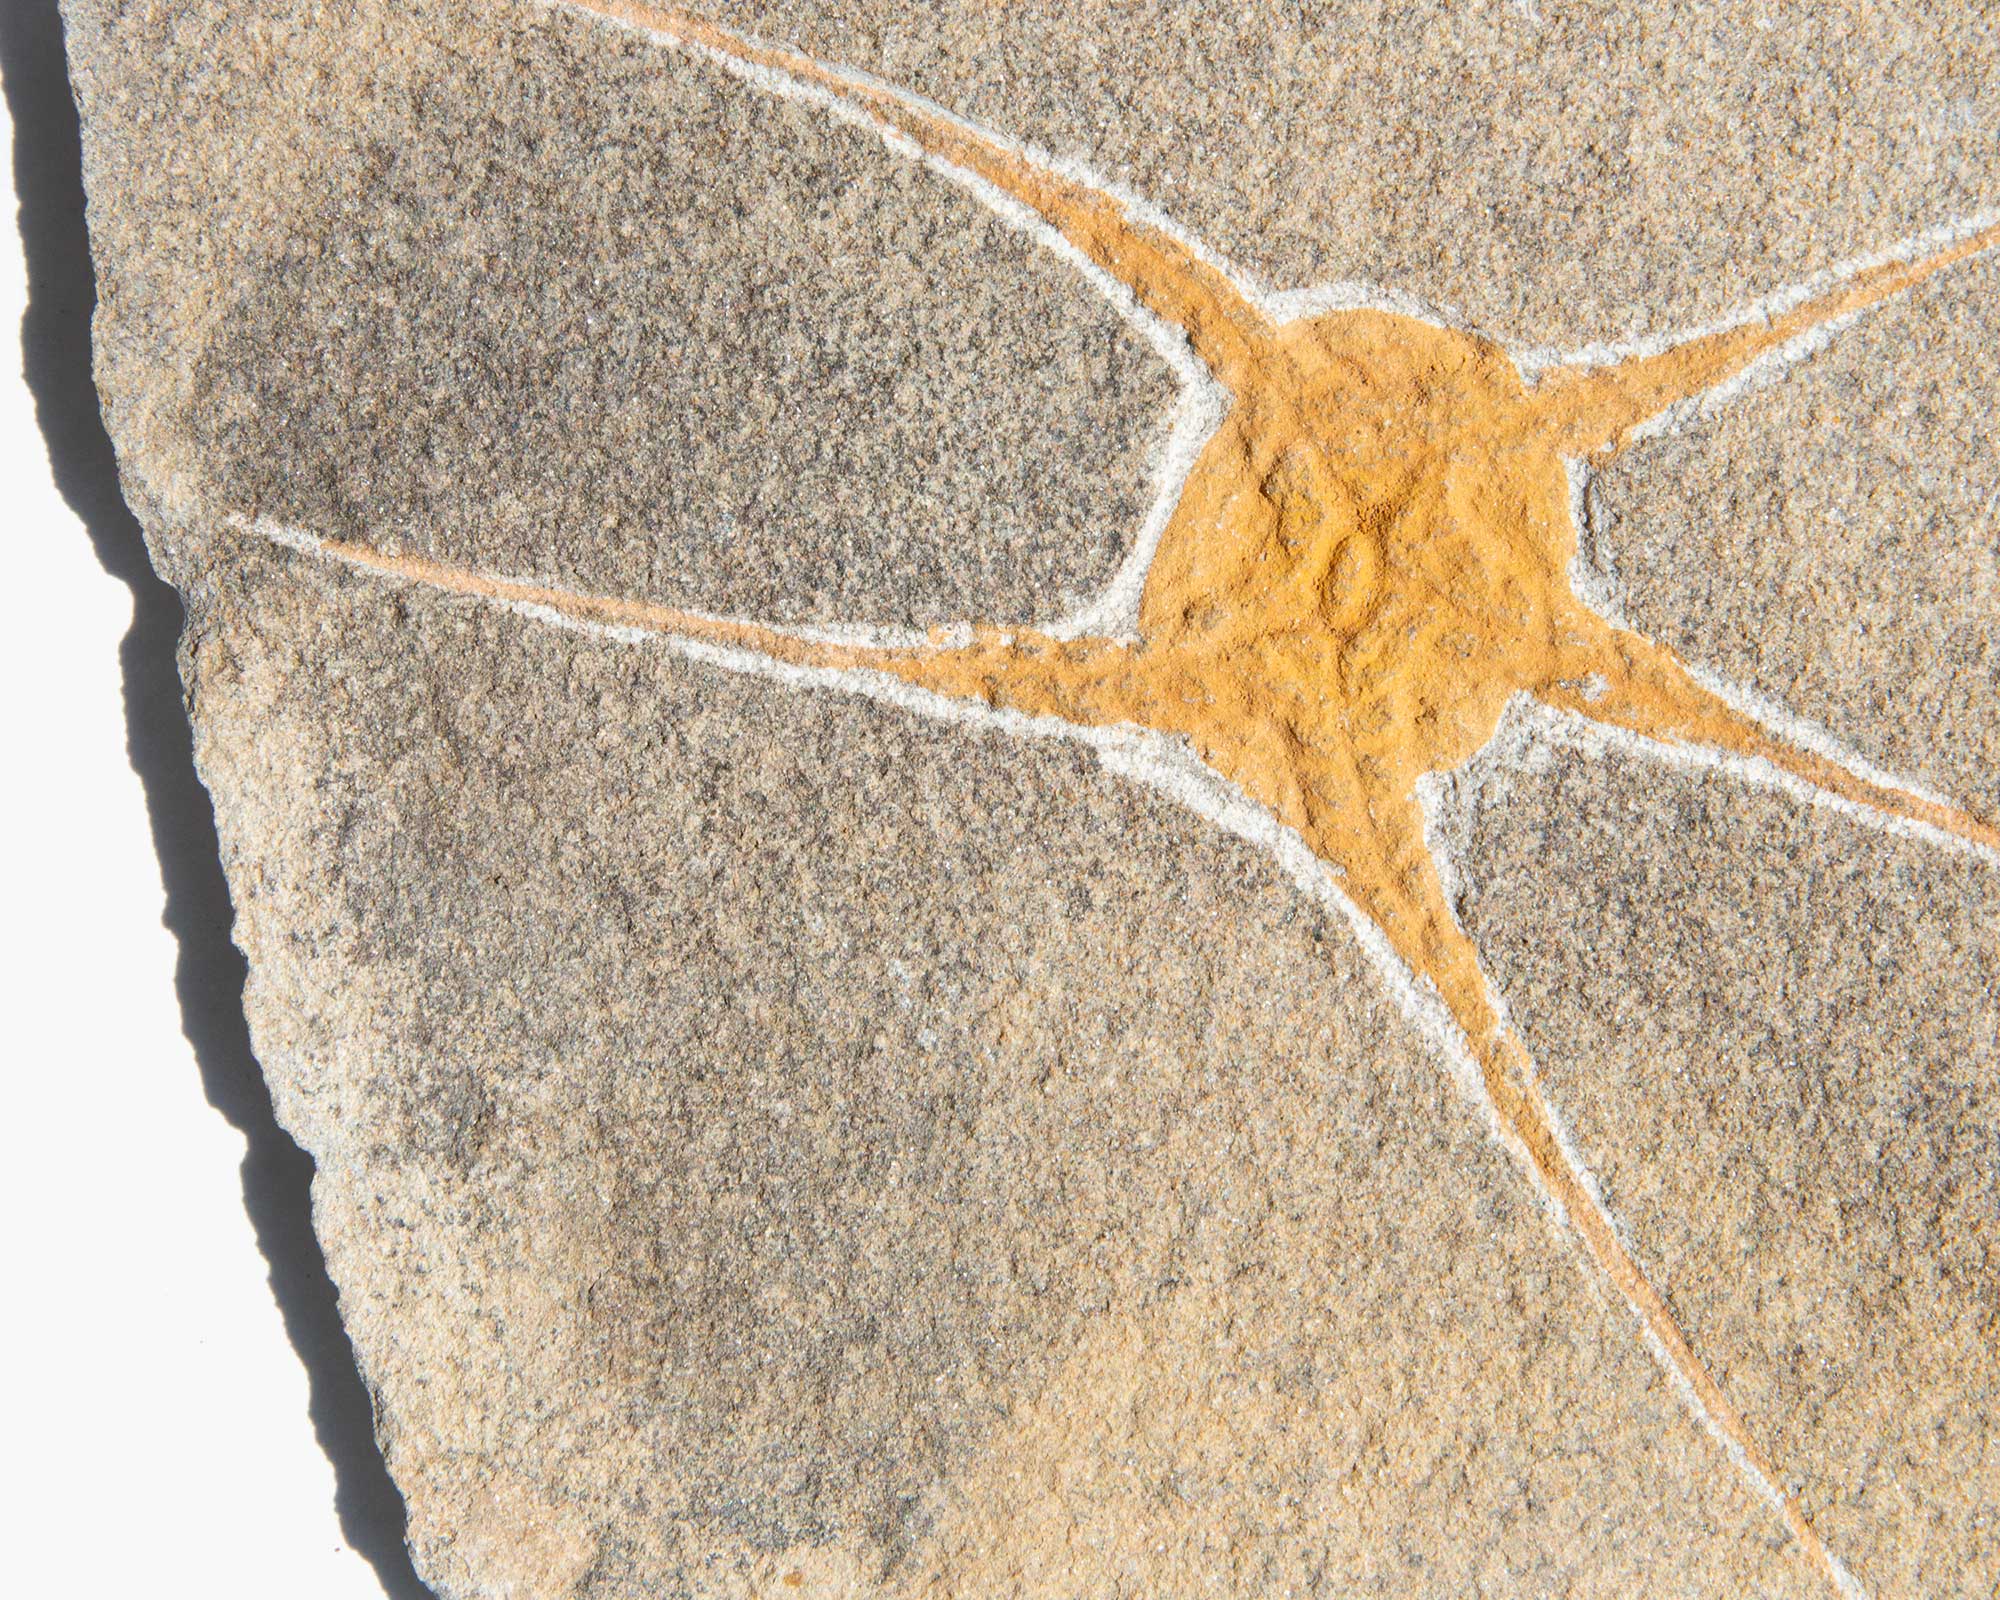 Brittle Star Fossil